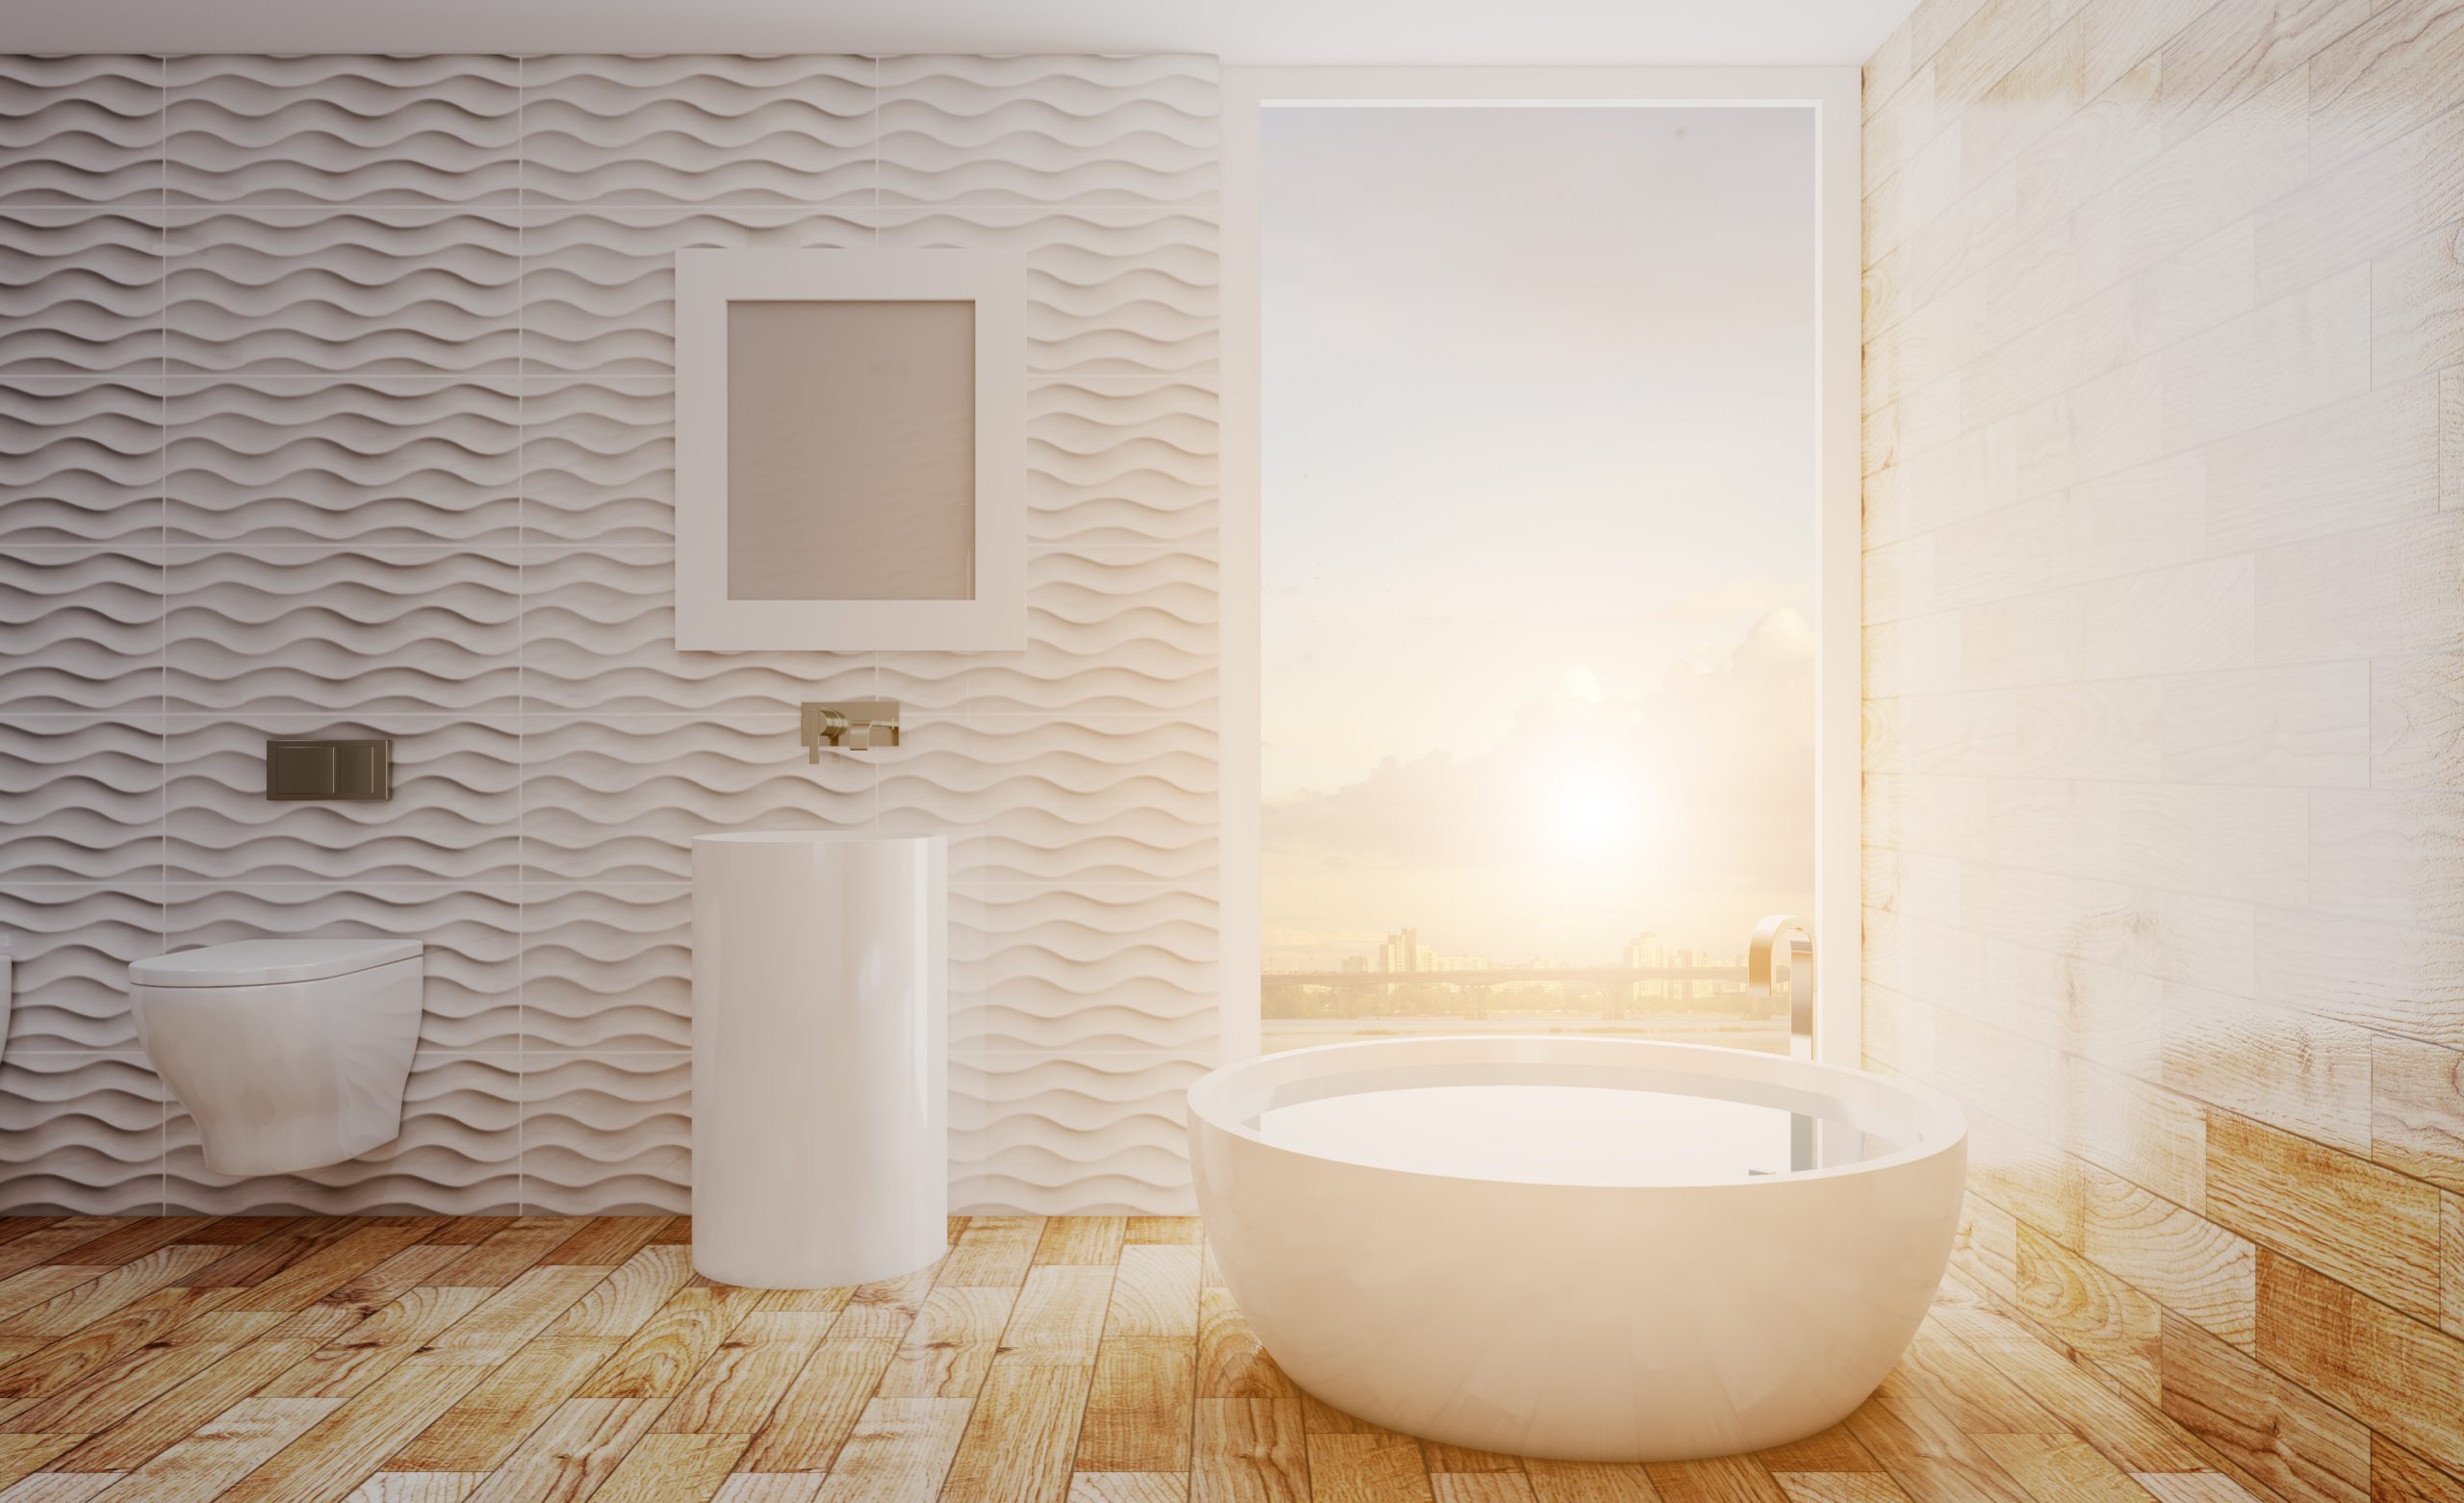 Scandinavian bathroom, classic vintage interior design with textured wall tile